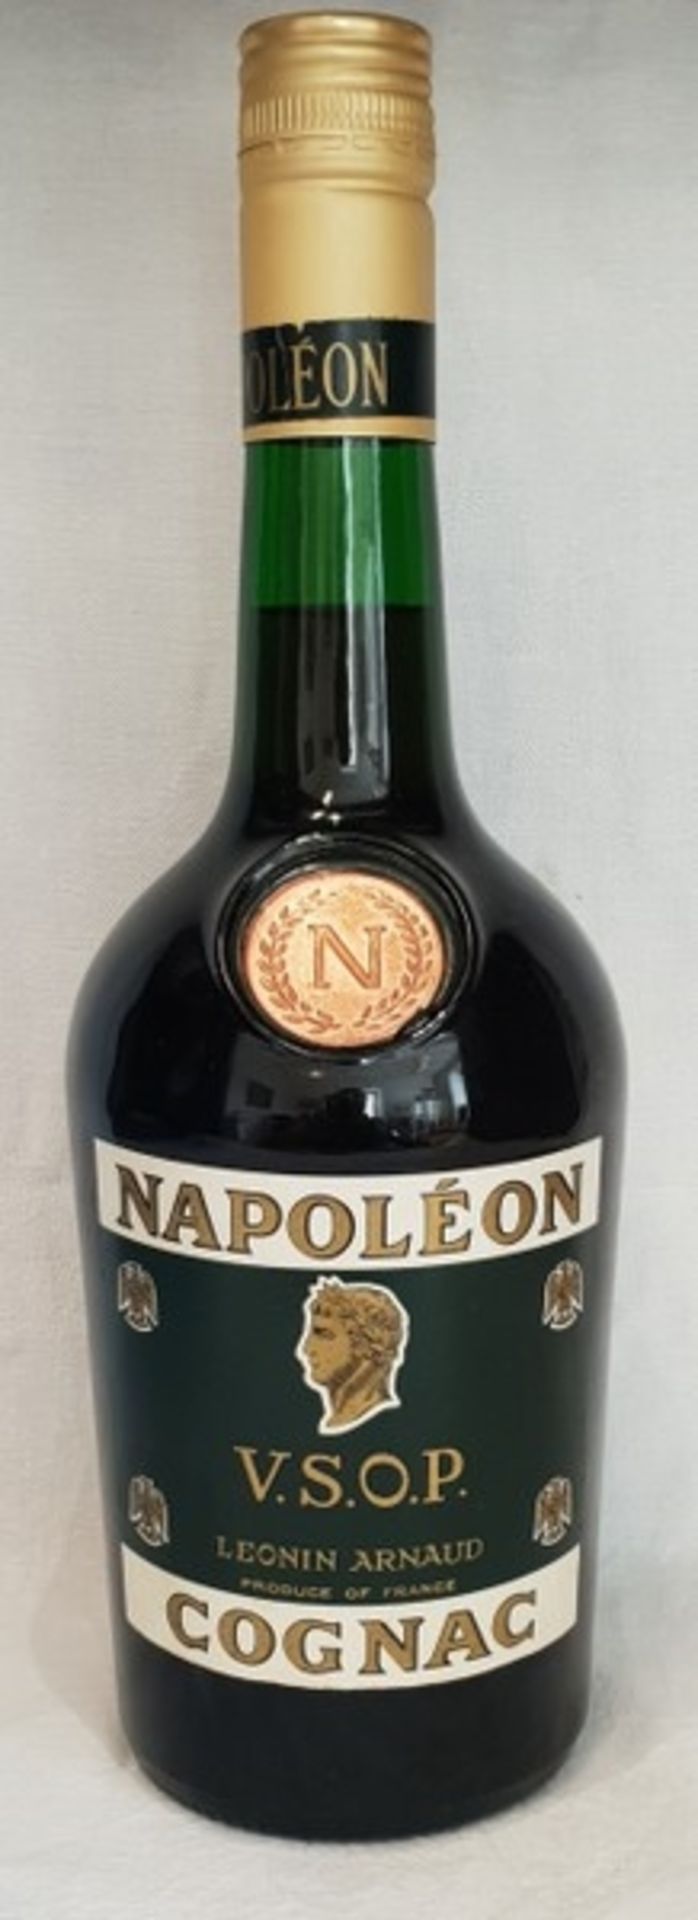 Leonin Arnaud Napoléon V.S.O.P. Cognac, 0,7l, 40% Alc/vol. 1970s